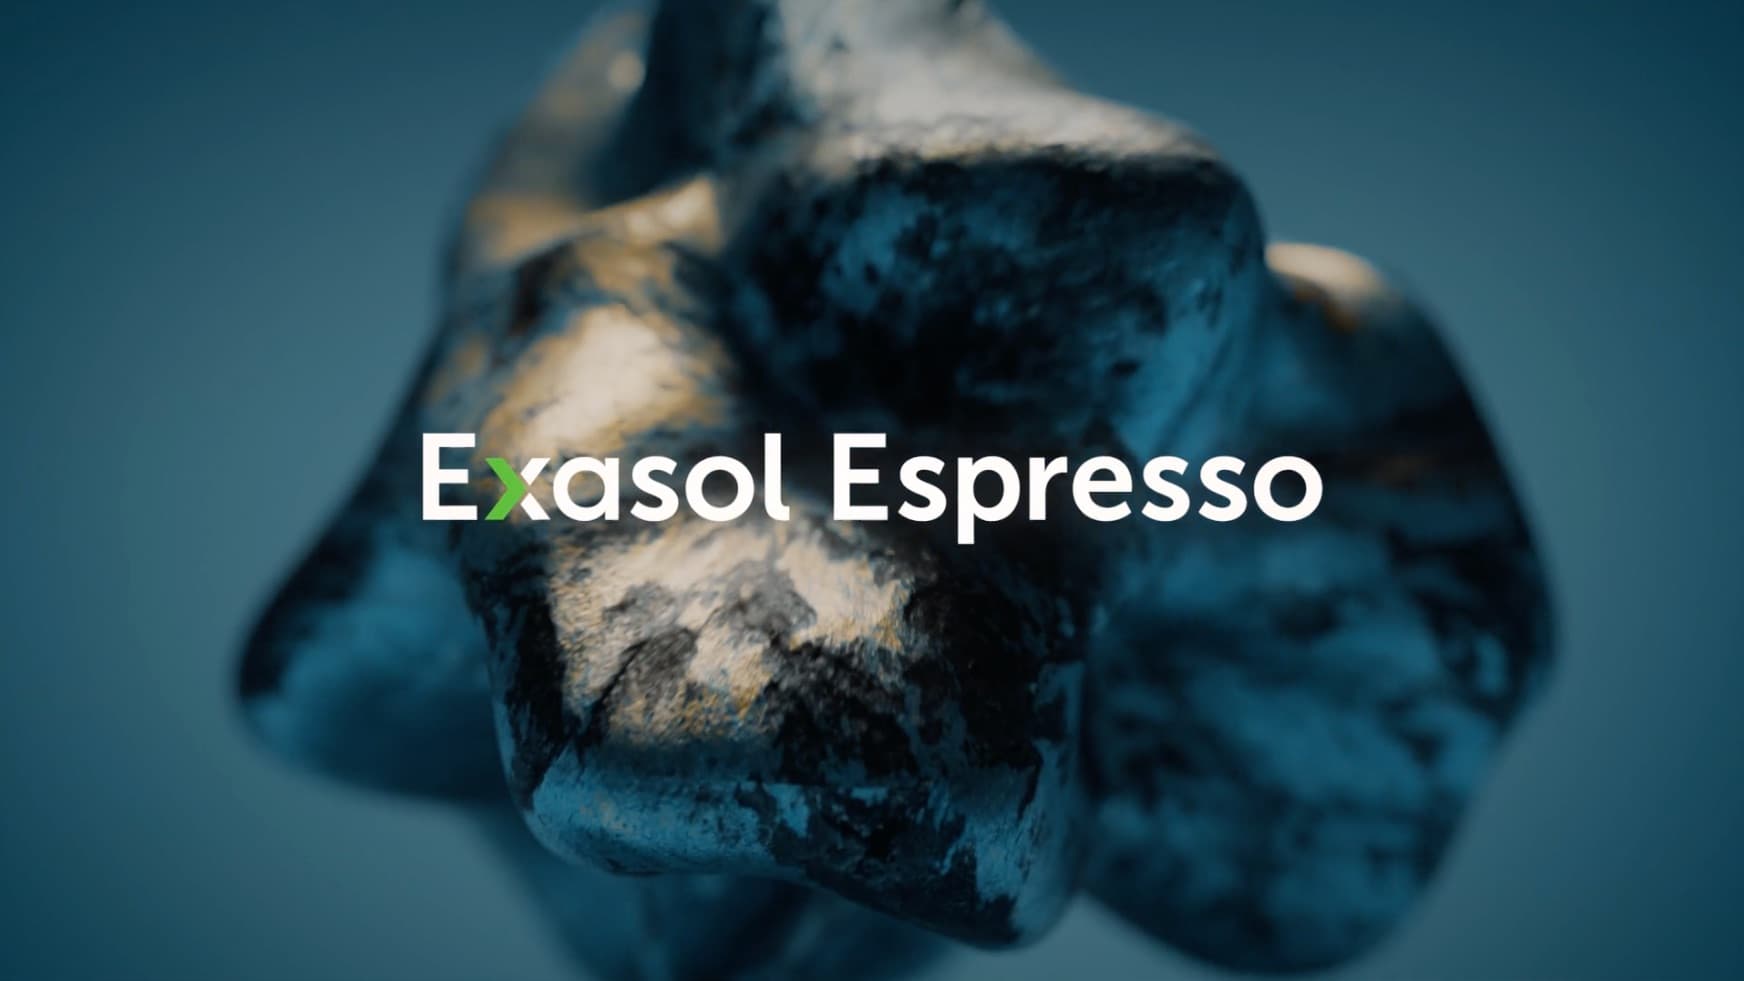 Watch the Exasol Espresso video